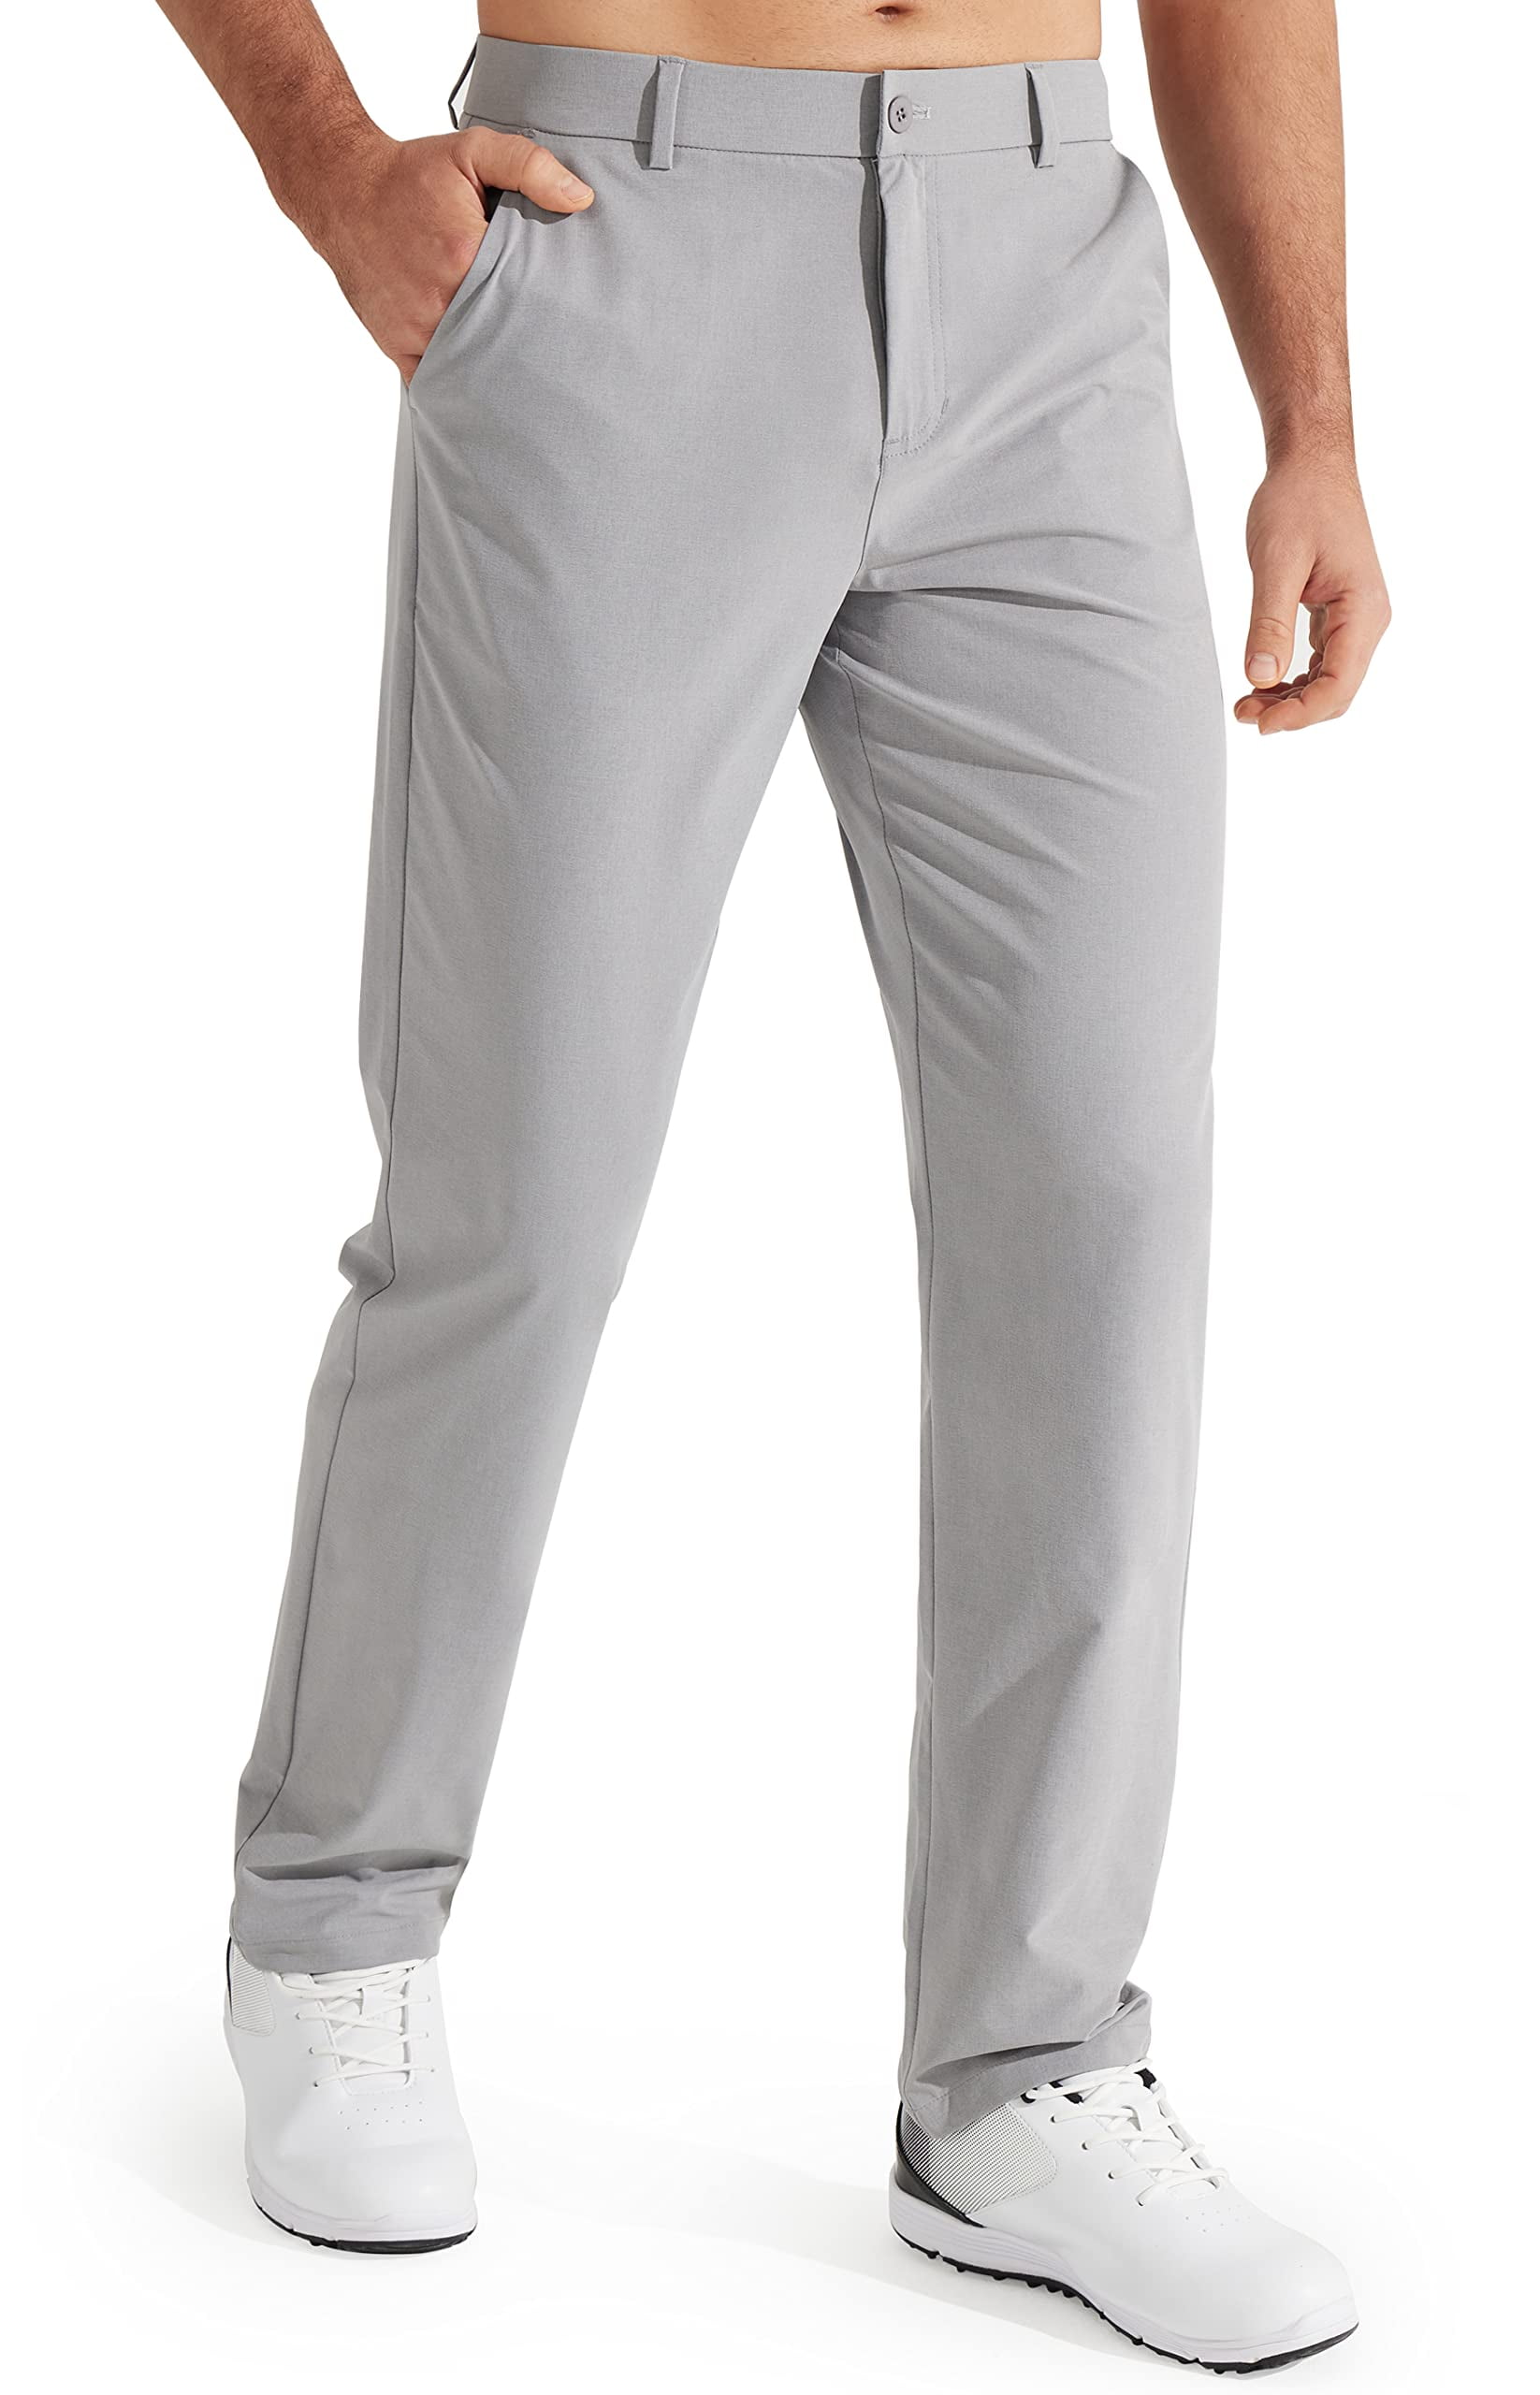 Libin Mens Golf Pants Slim Fit Stretch Work Dress Pants 30 Quick Dry  Lightweight Casual Business Comfort Water Resistant, Light Grey, 32W x 30L  